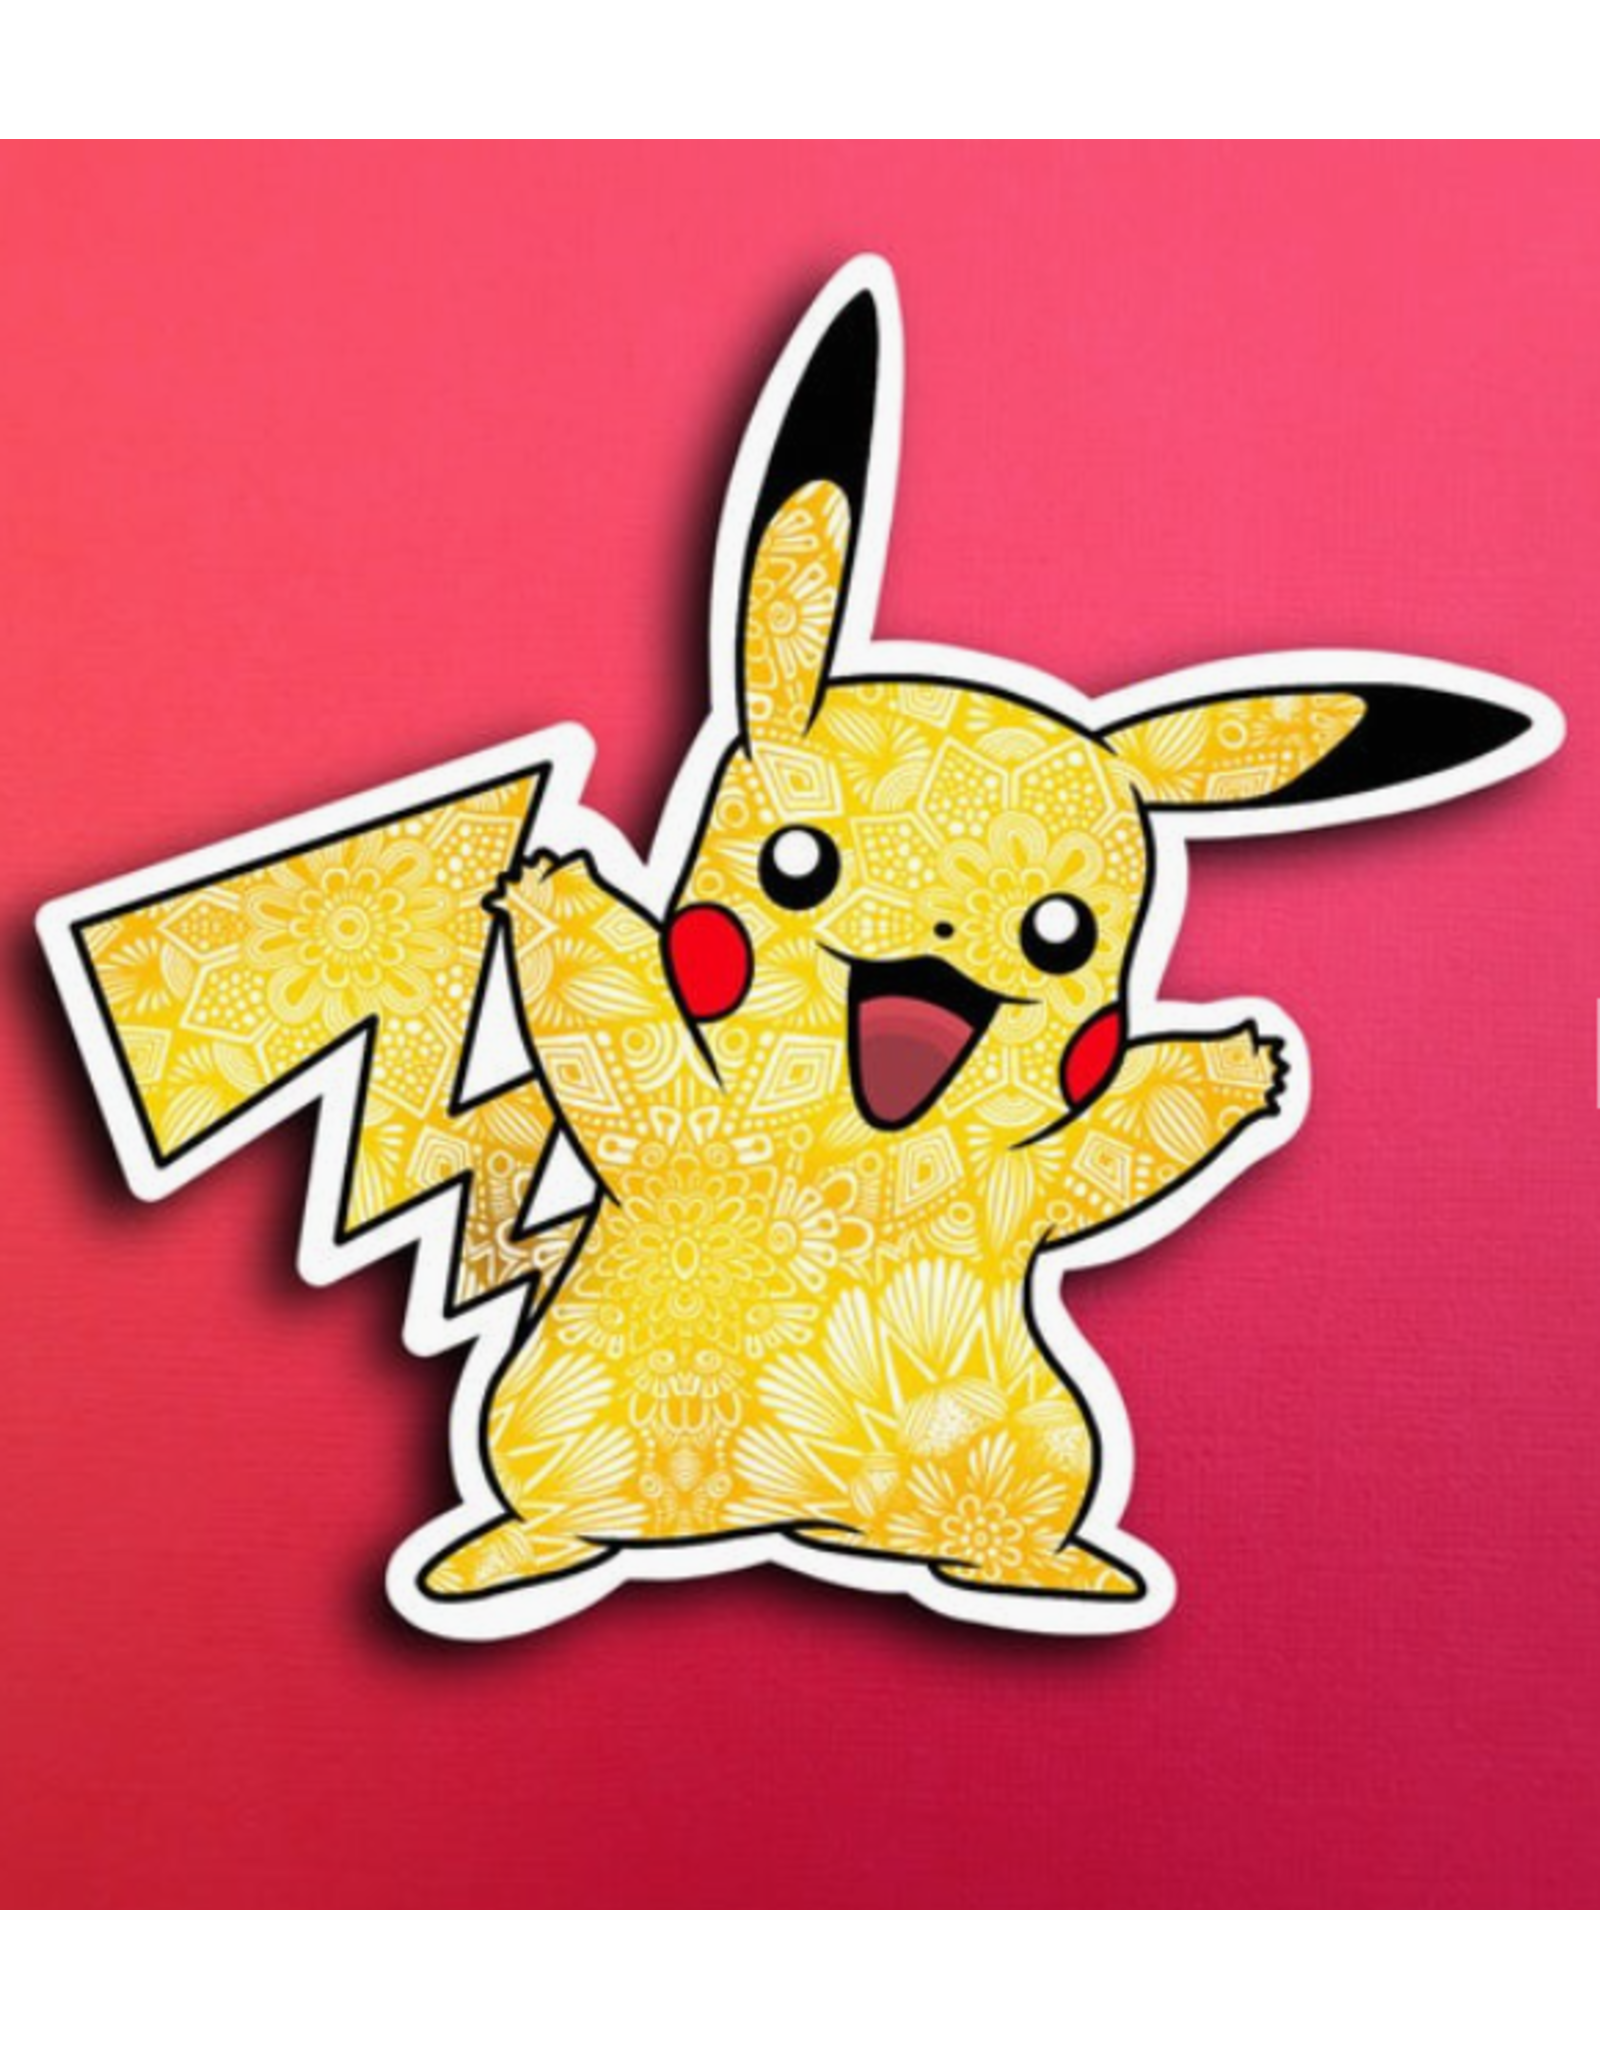 Pikachu Vinyl Sticker